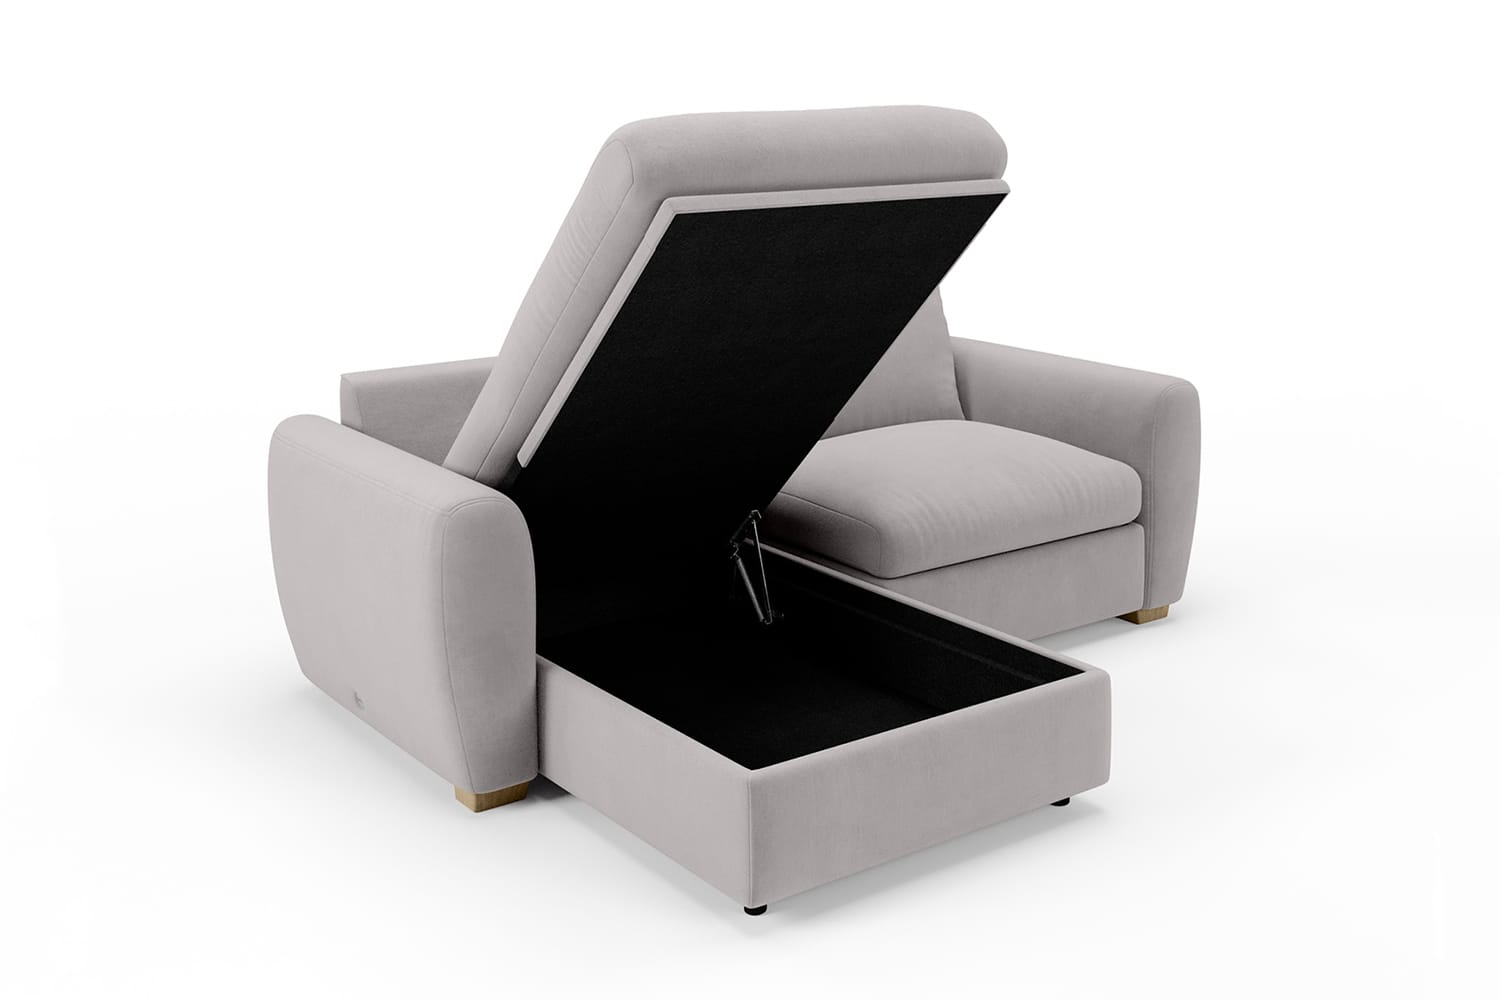 SNUG | The Cloud Sundae Chaise Corner Sofa in Warm Grey variant_40414970249264